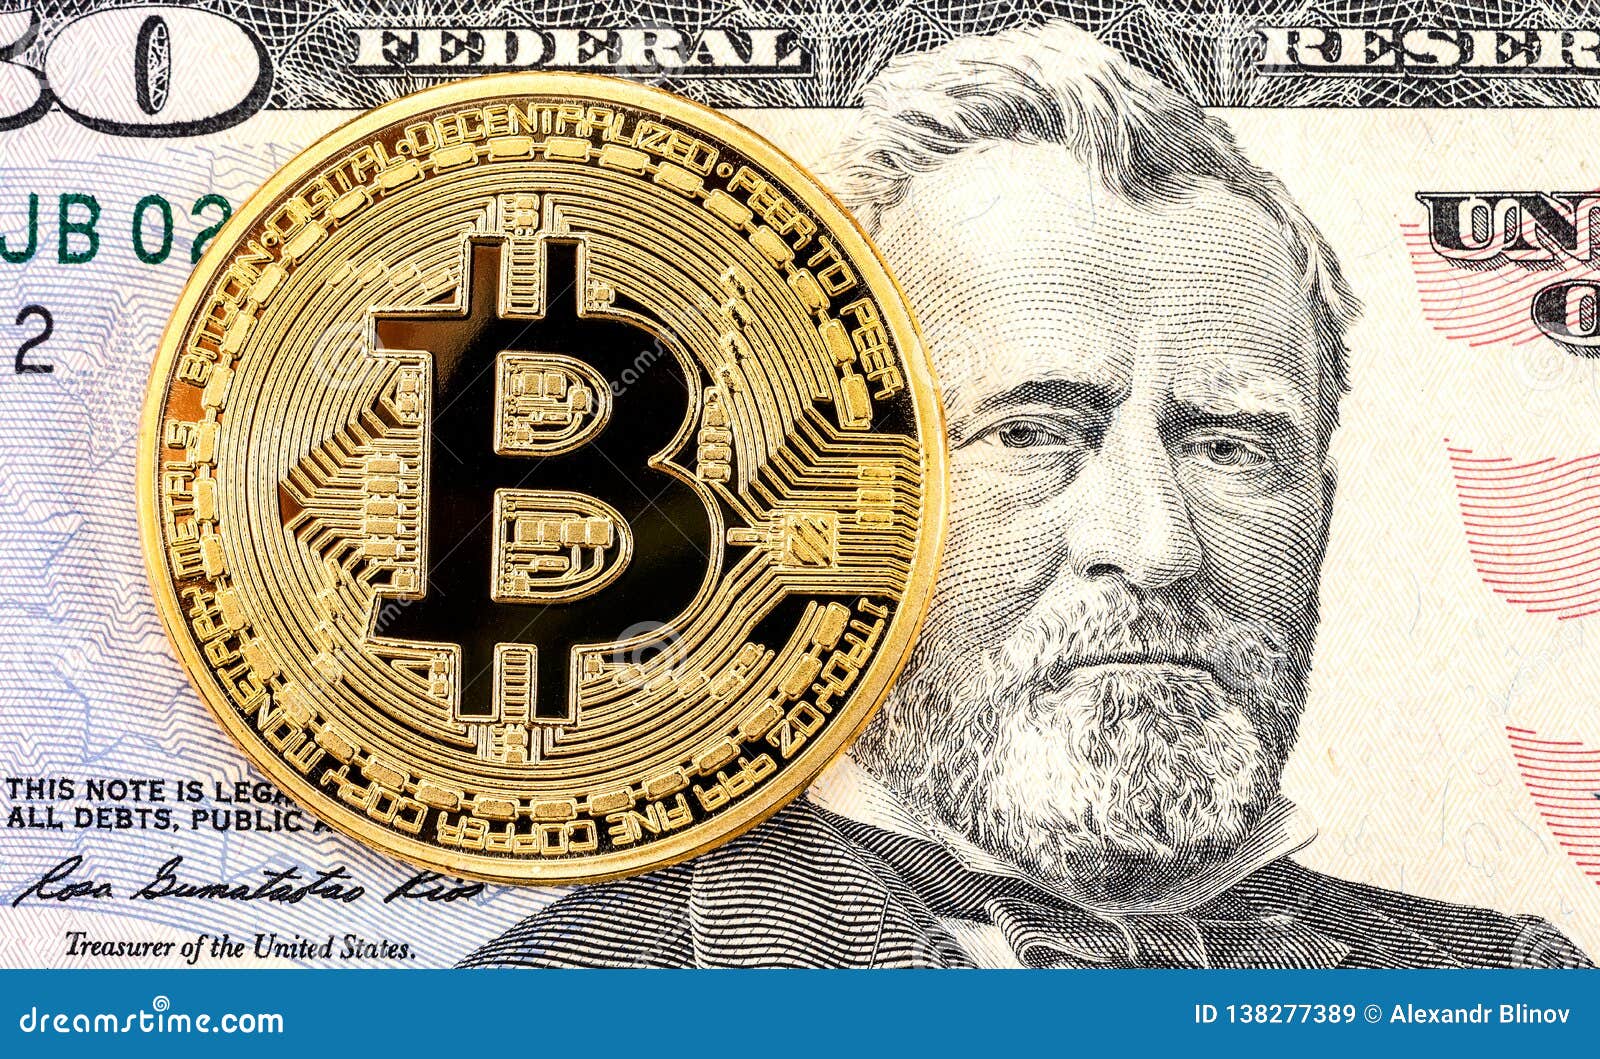 Convert 50 BTC to PYUSD - Bitcoin to PayPal USD Converter | CoinCodex